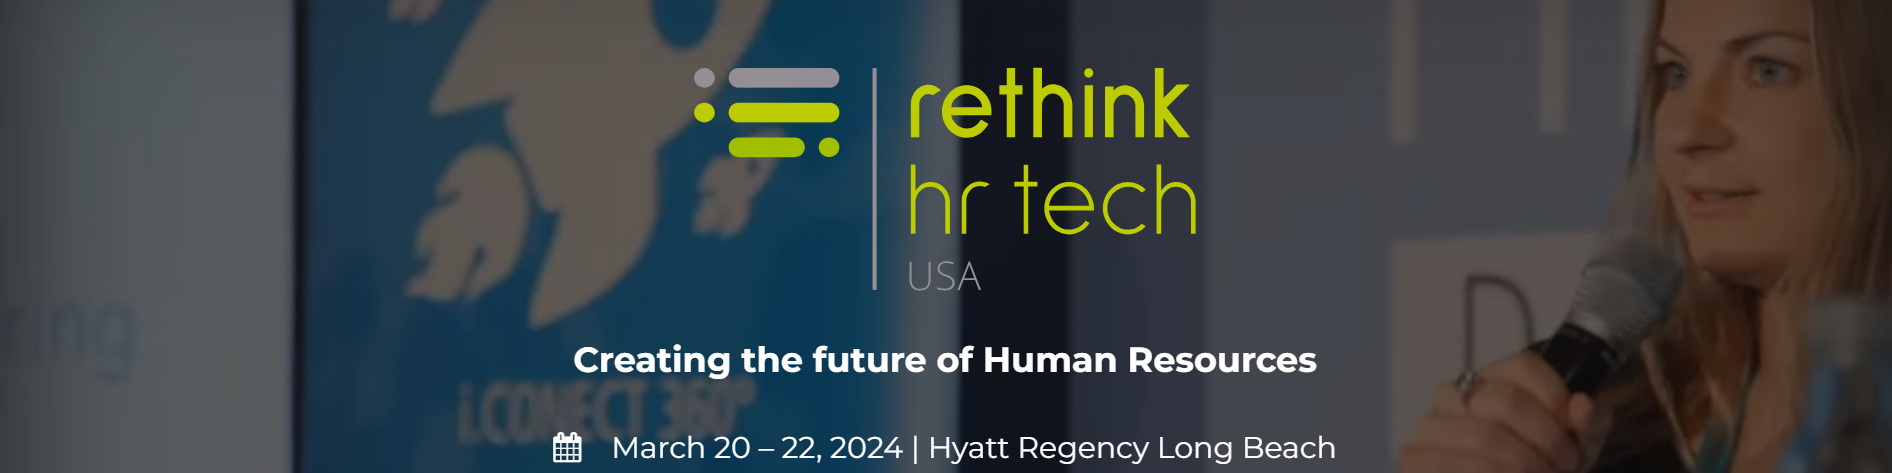 Rethink HR Tech USA